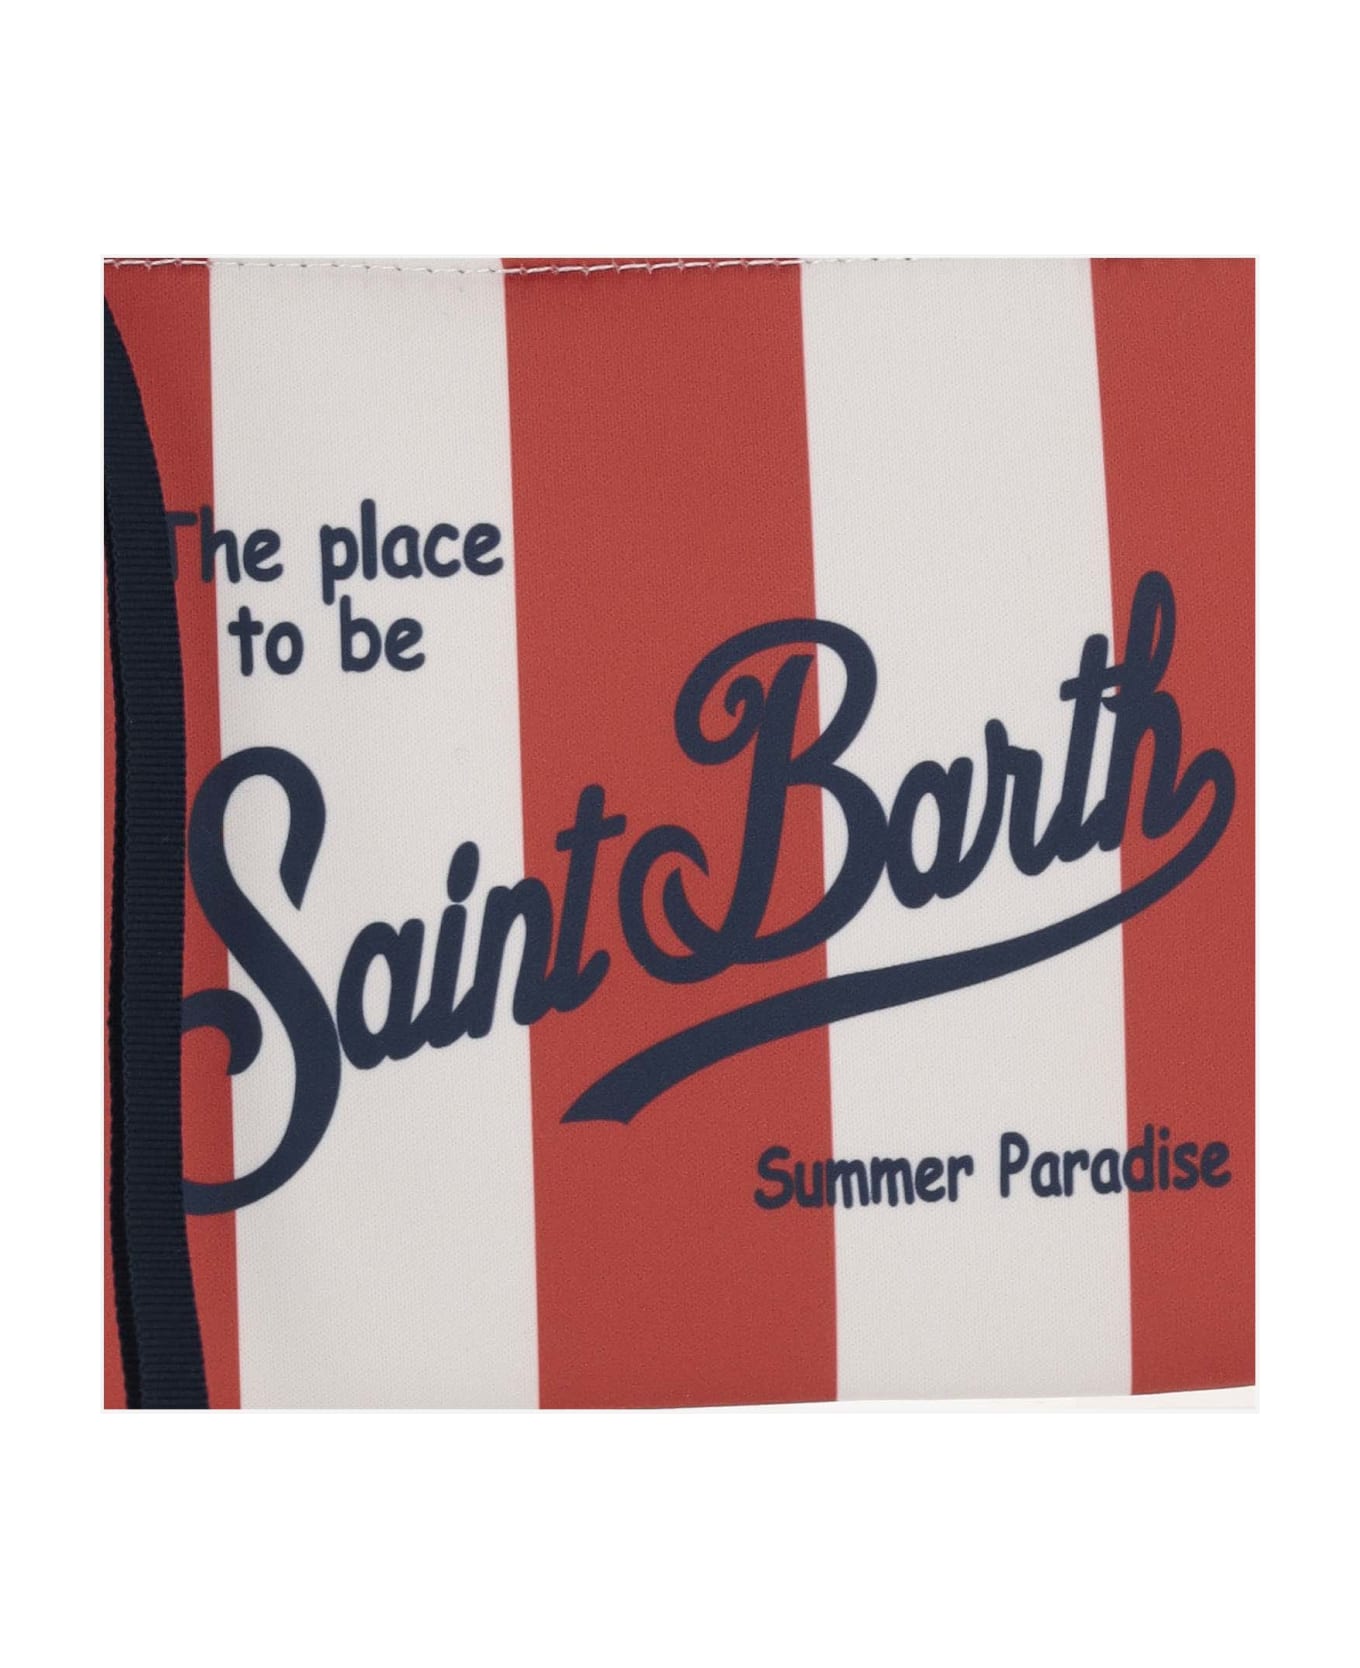 MC2 Saint Barth Scuba Clutch Bag With Striped Pattern - Fantasia